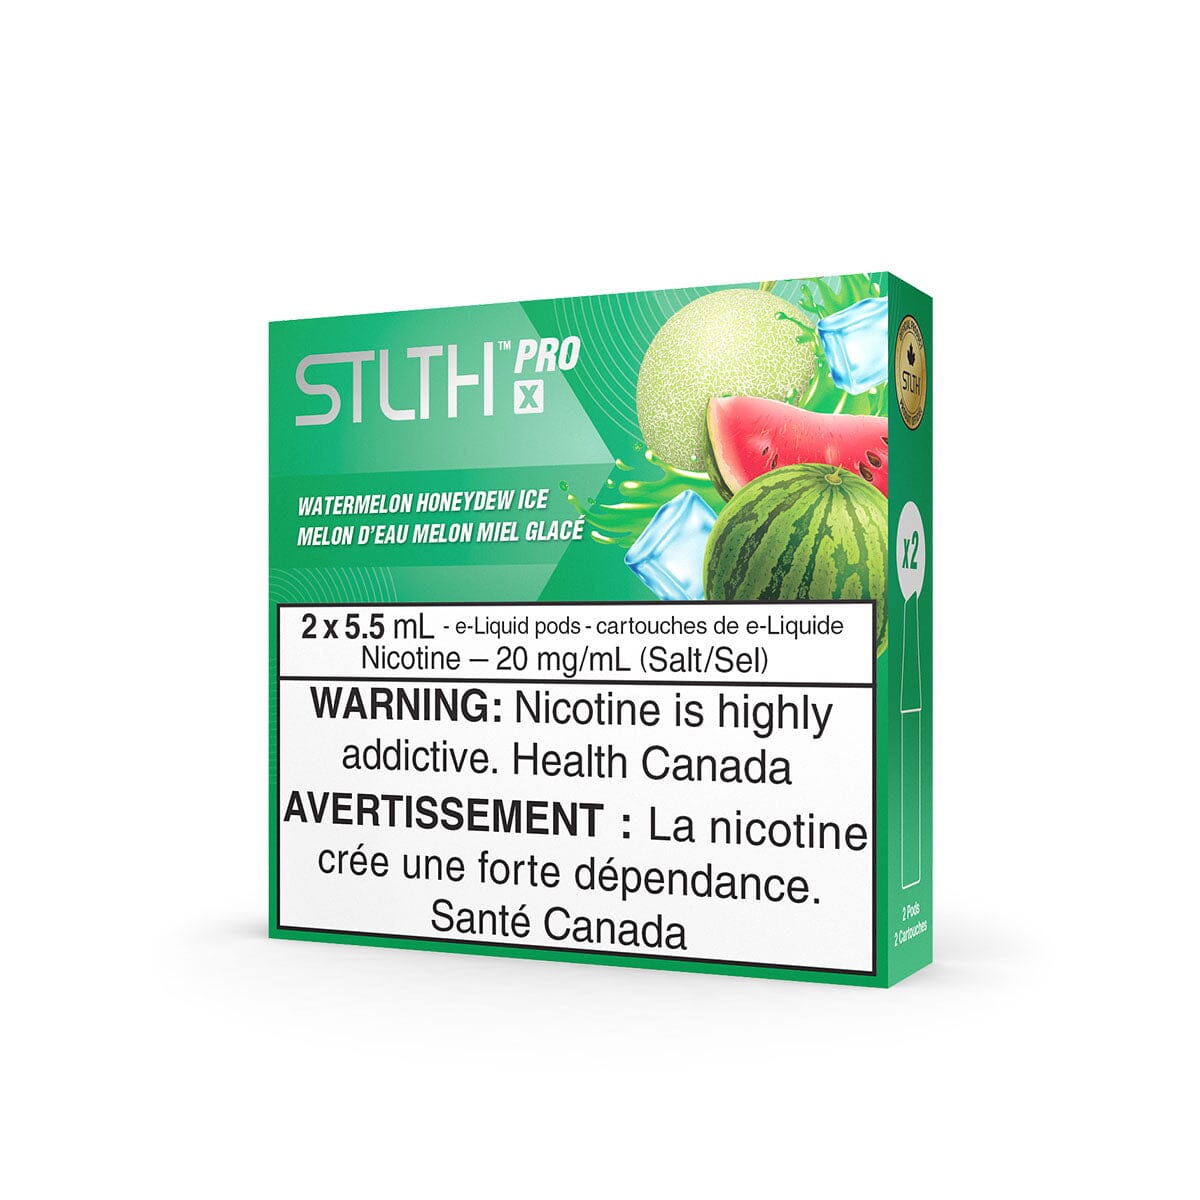 STLTH Pro X Watermelon Honeydew Ice Vape Pods Pre-Filled Pod STLTH 